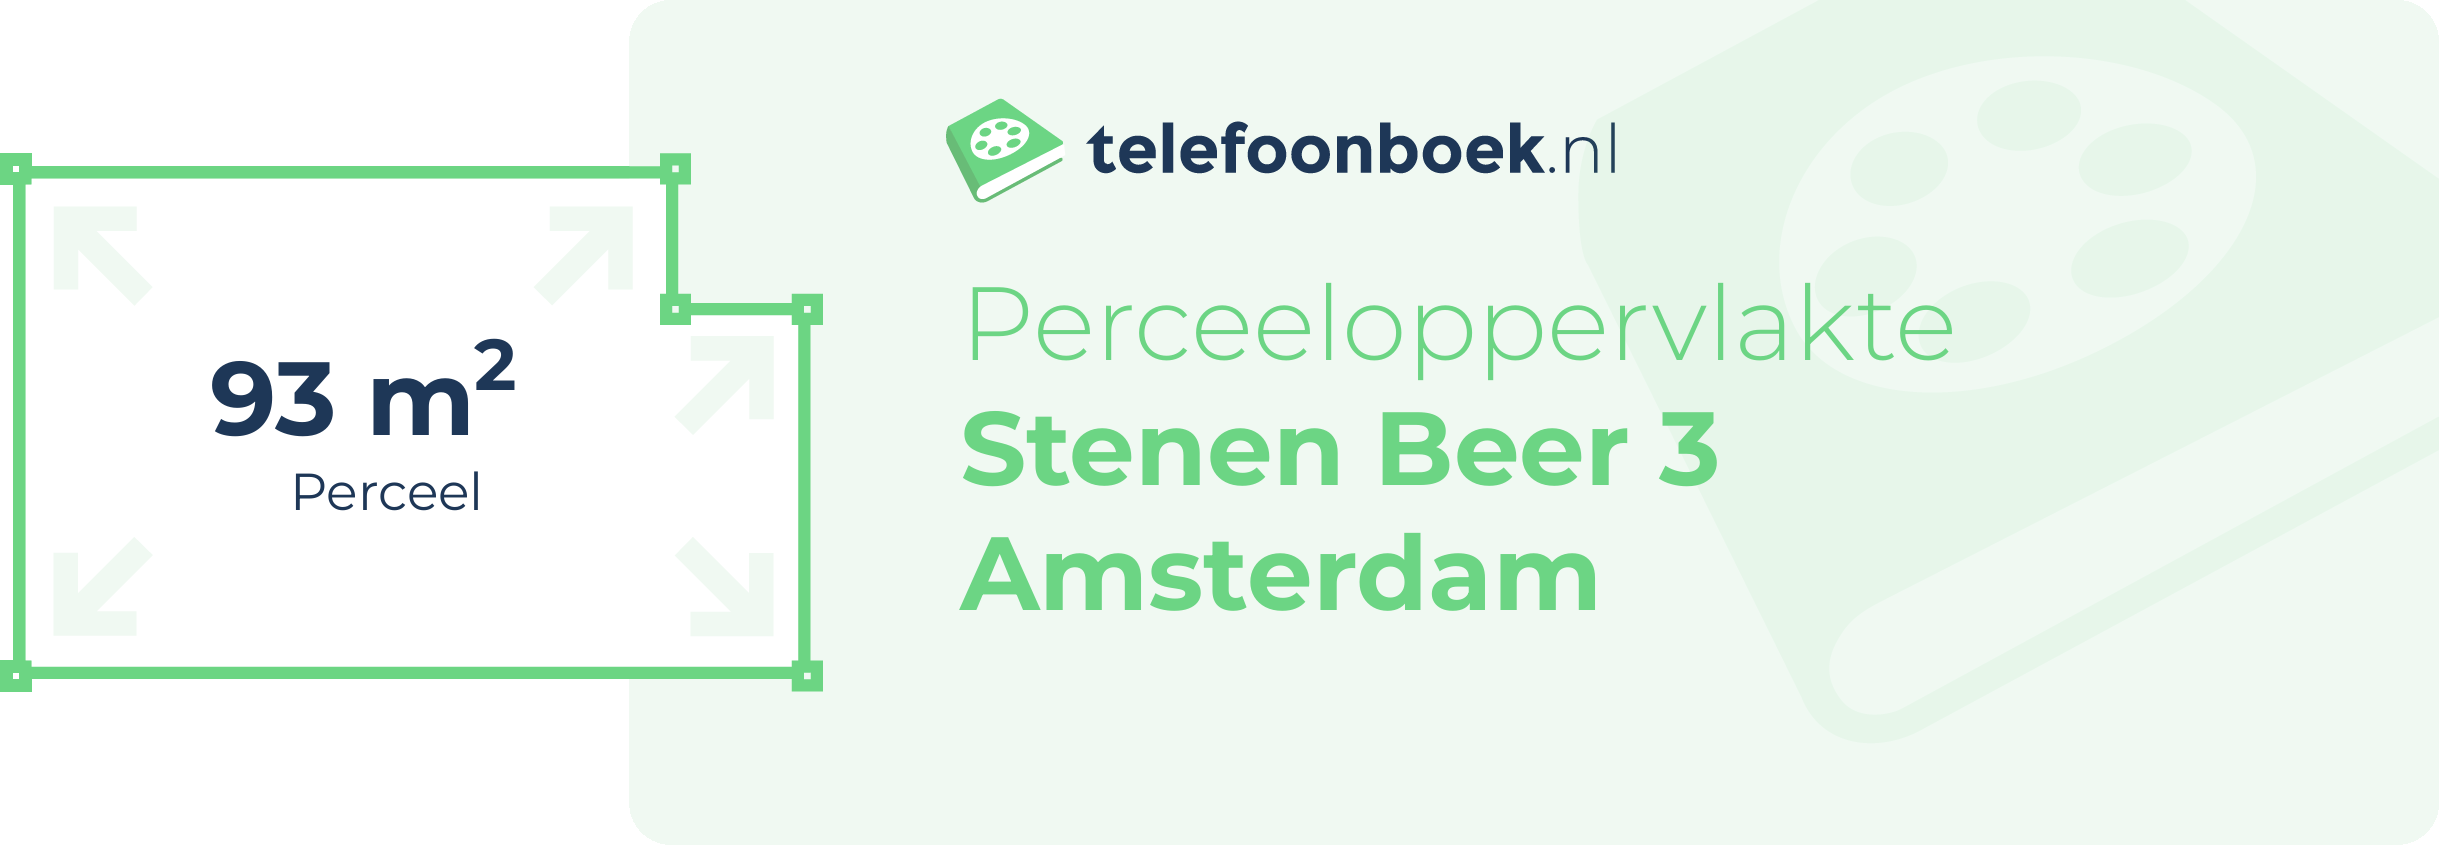 Perceeloppervlakte Stenen Beer 3 Amsterdam